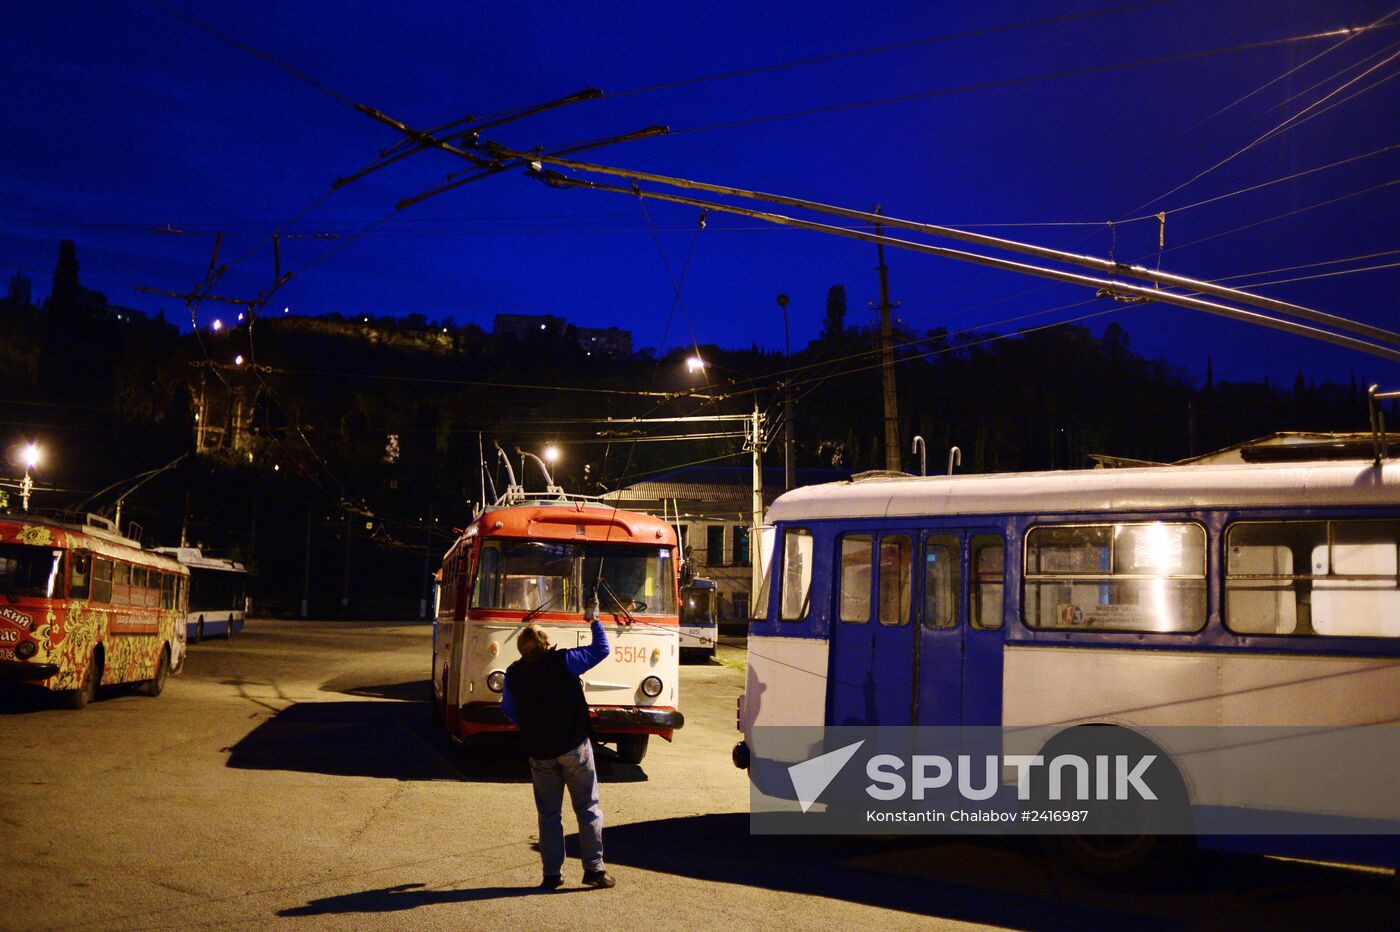 The Yalta trolleybus company